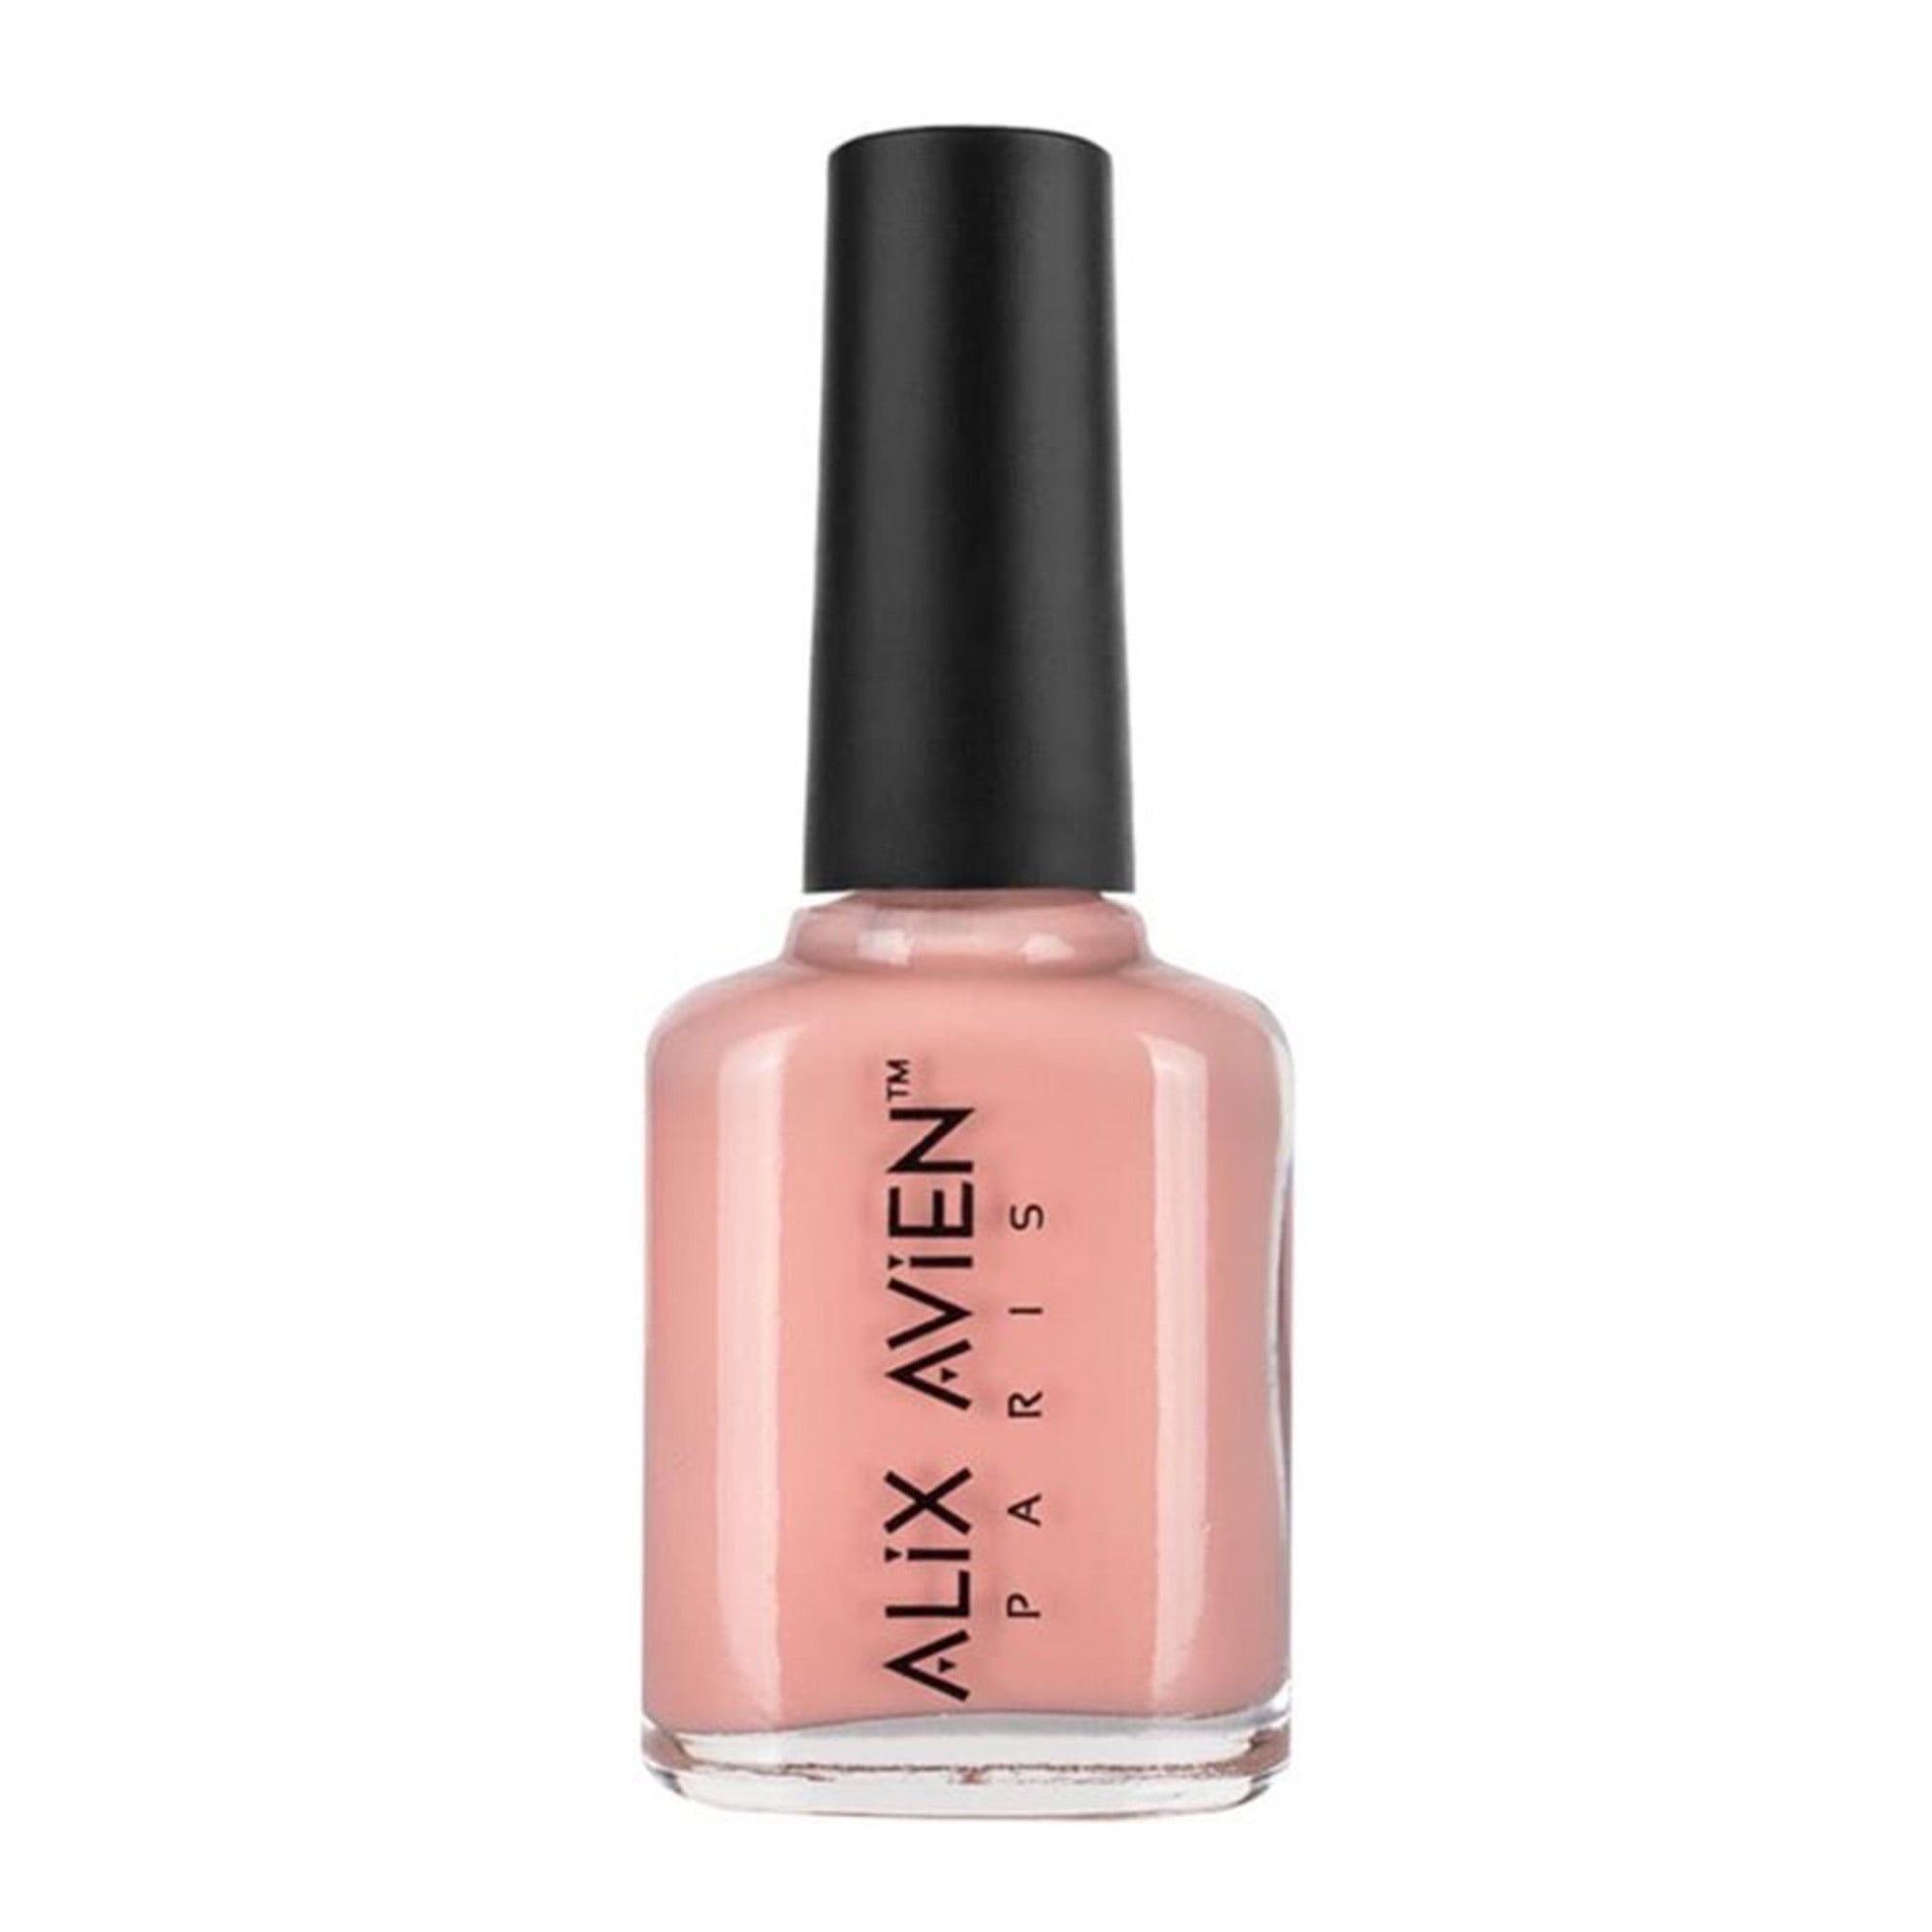 Alix Avien - Nail Polish No.64 (Heavenly Pink) - Eson Direct